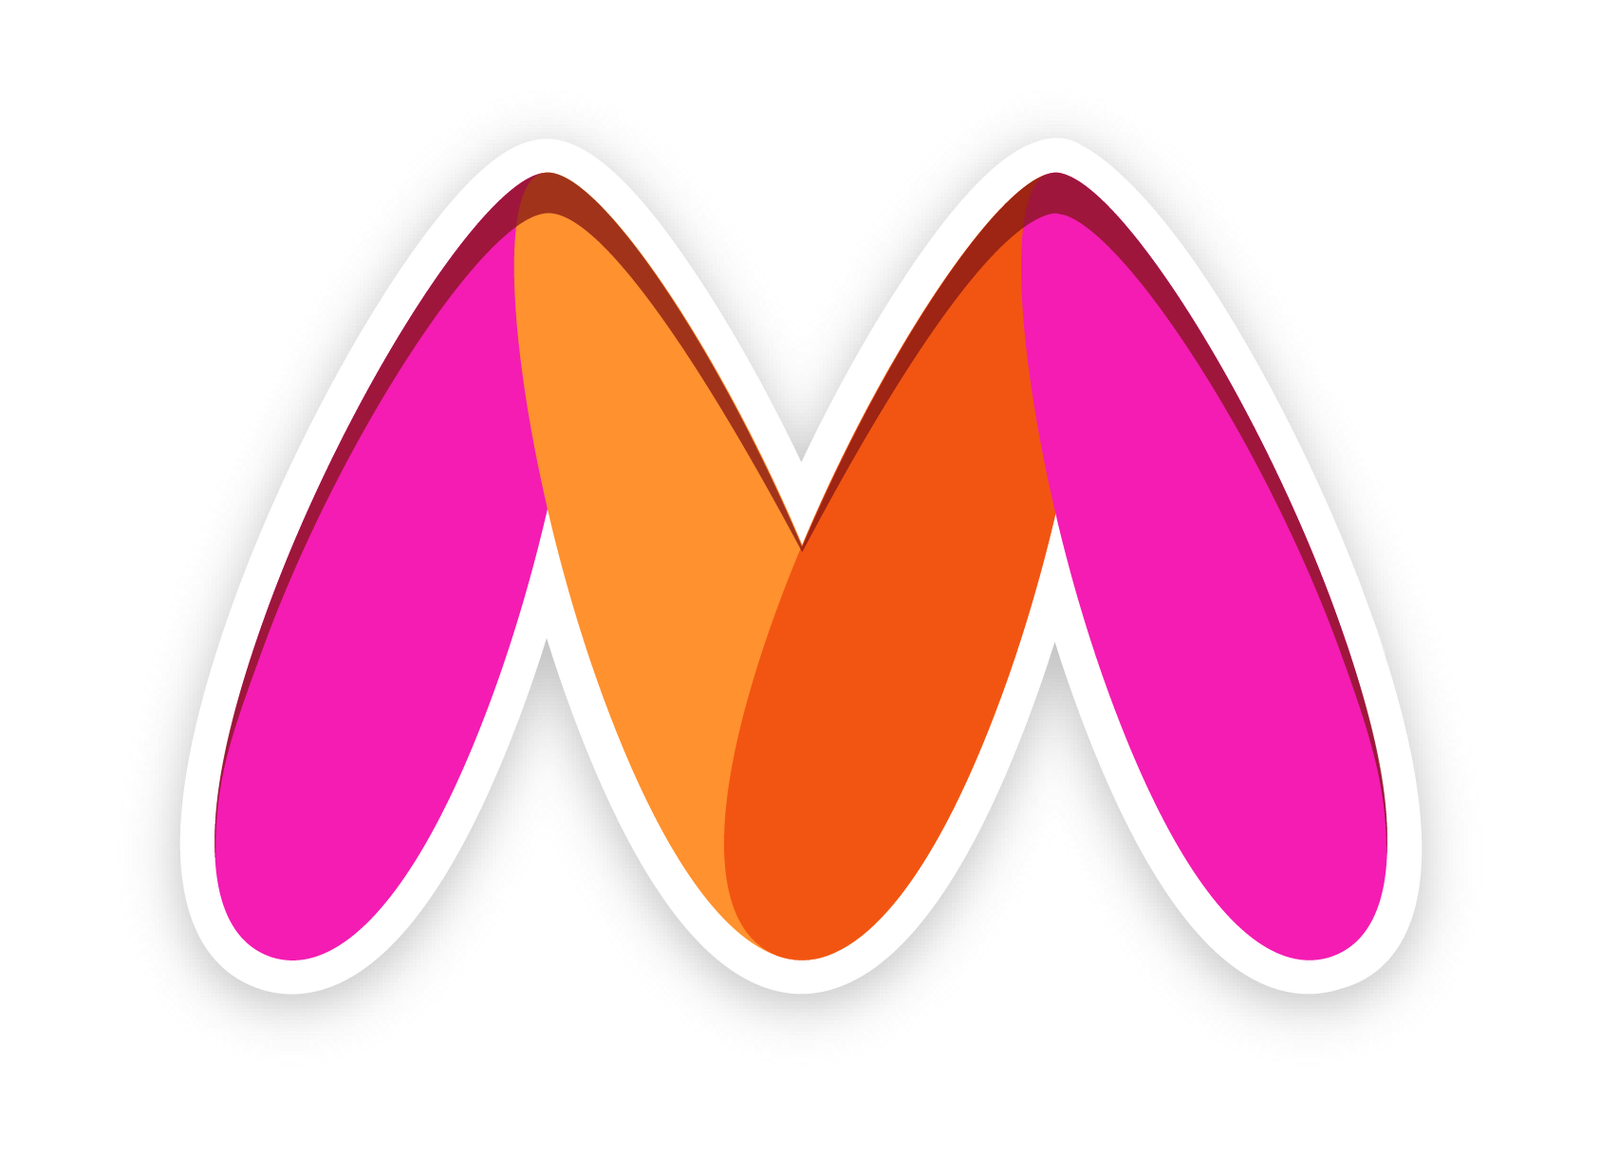 Myntra-logo